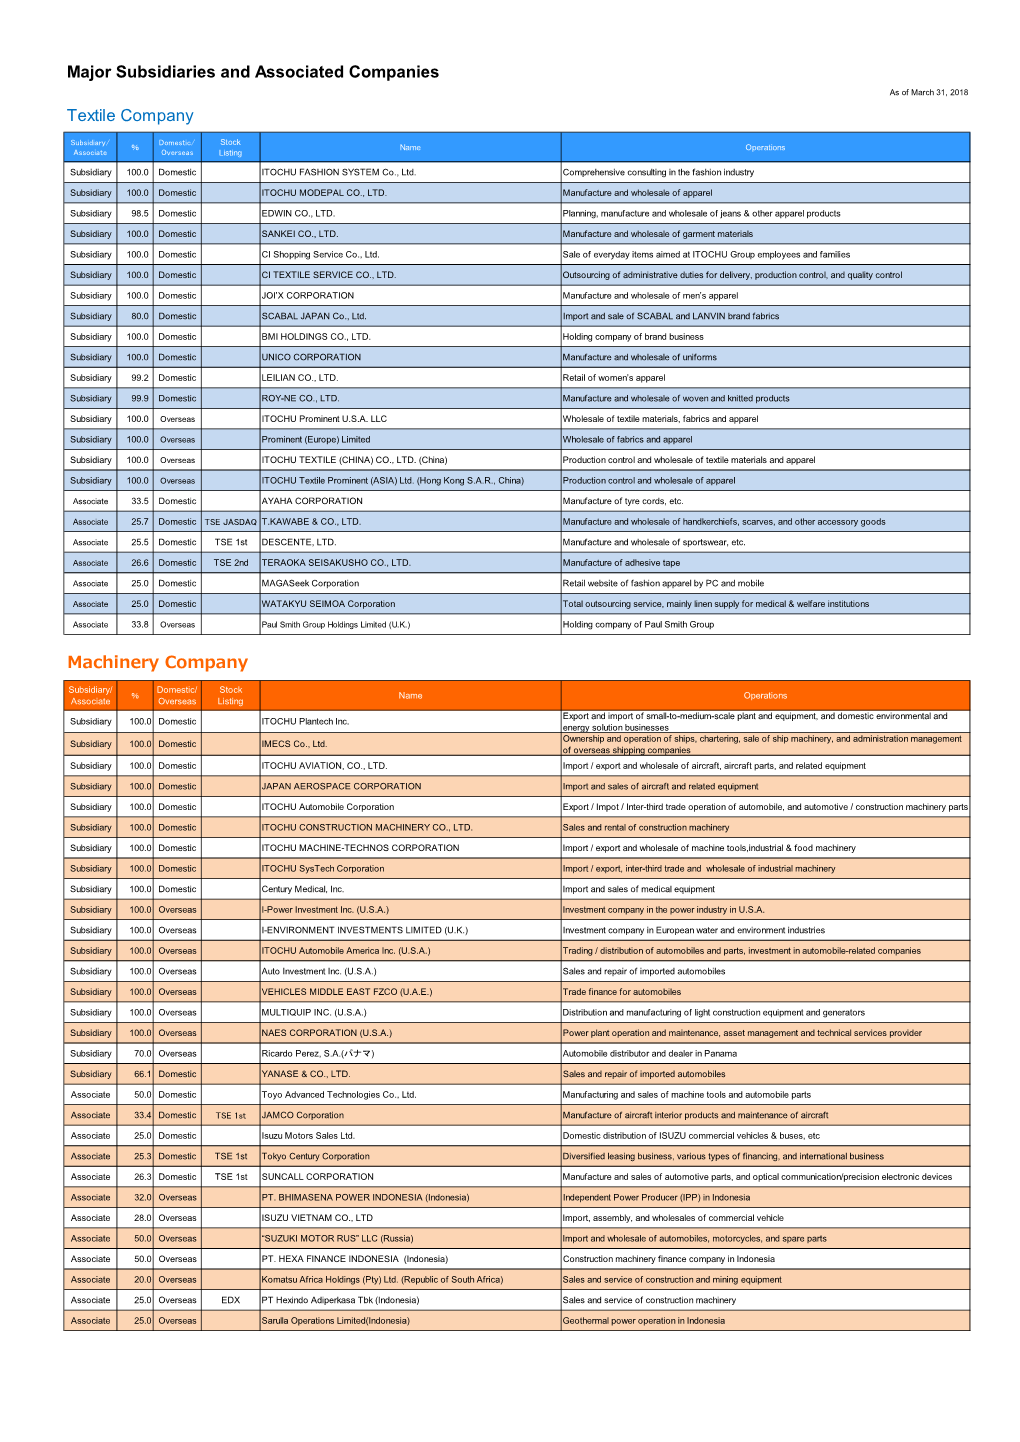 Major Subsidiaries and Associated Companies (PDF 181KB)